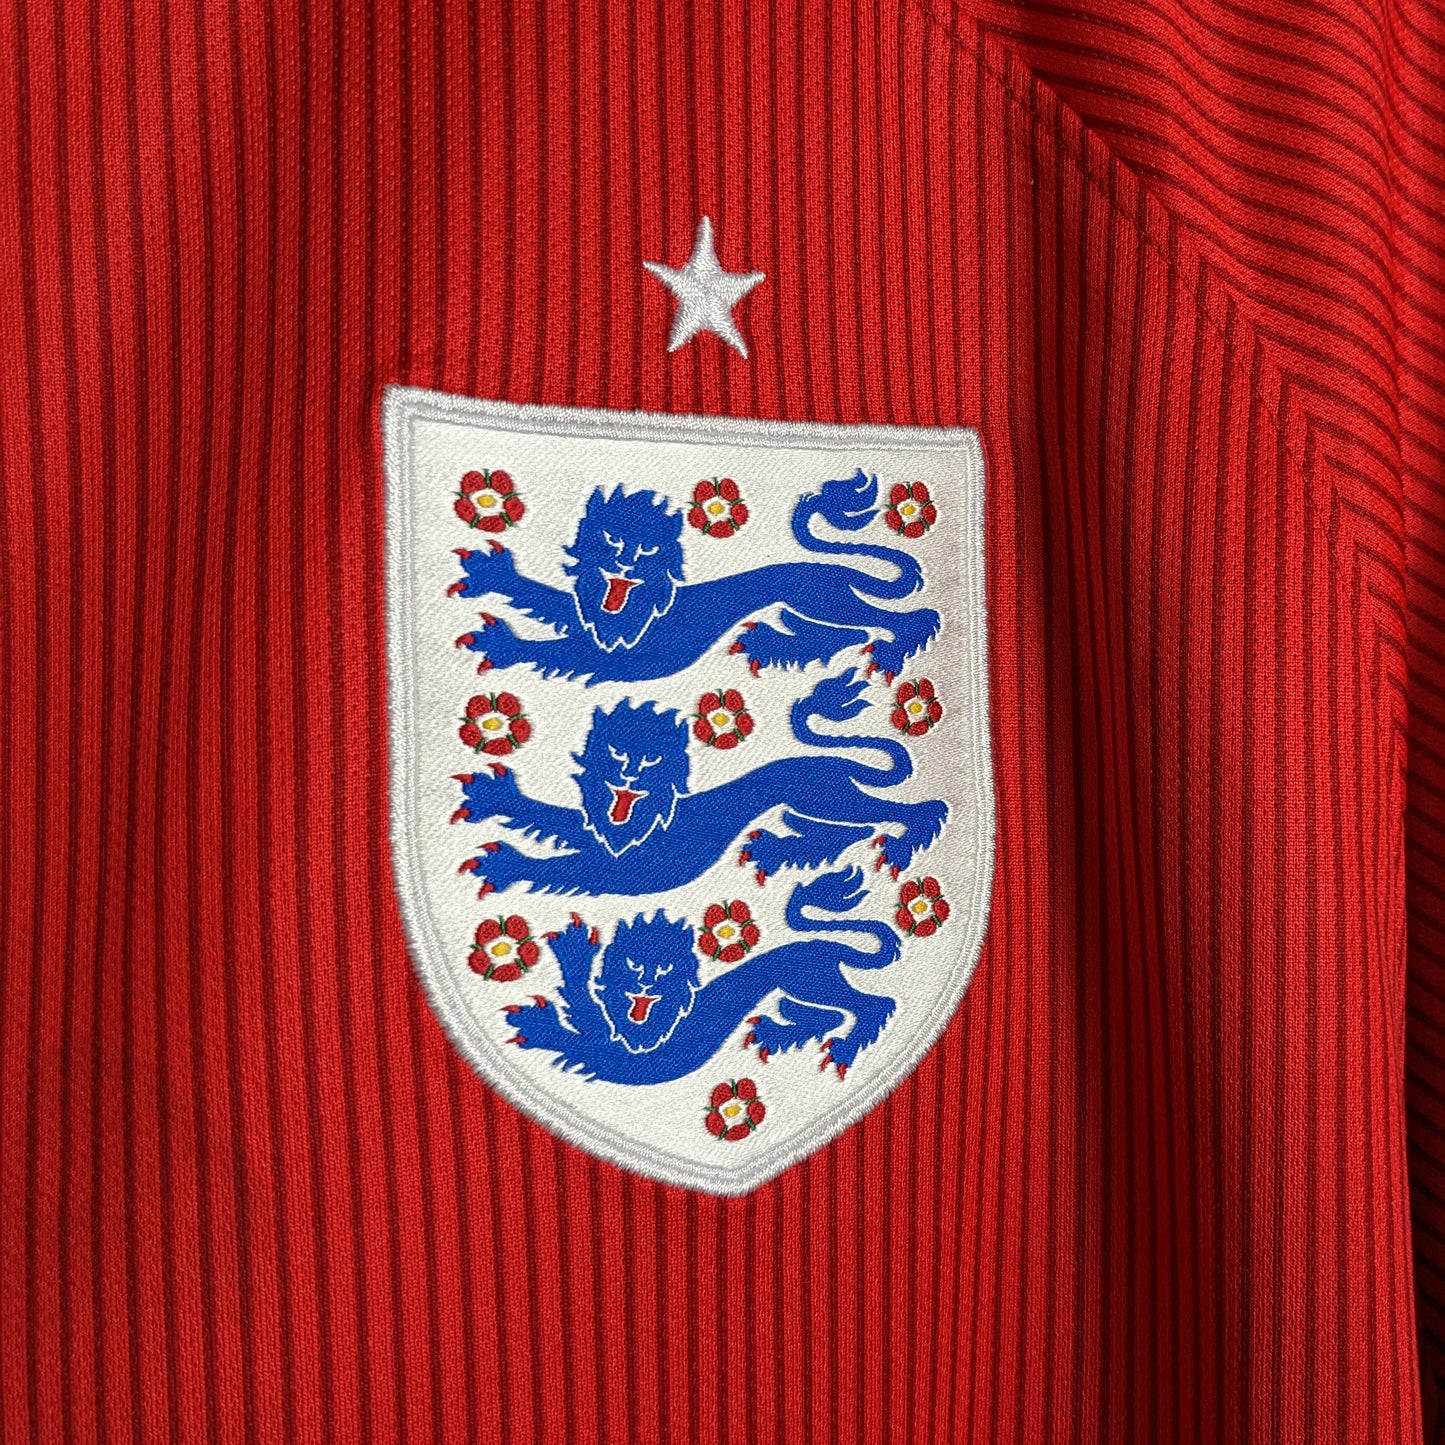 Authentic England 2014 Away - Gerrard #8 Size XL